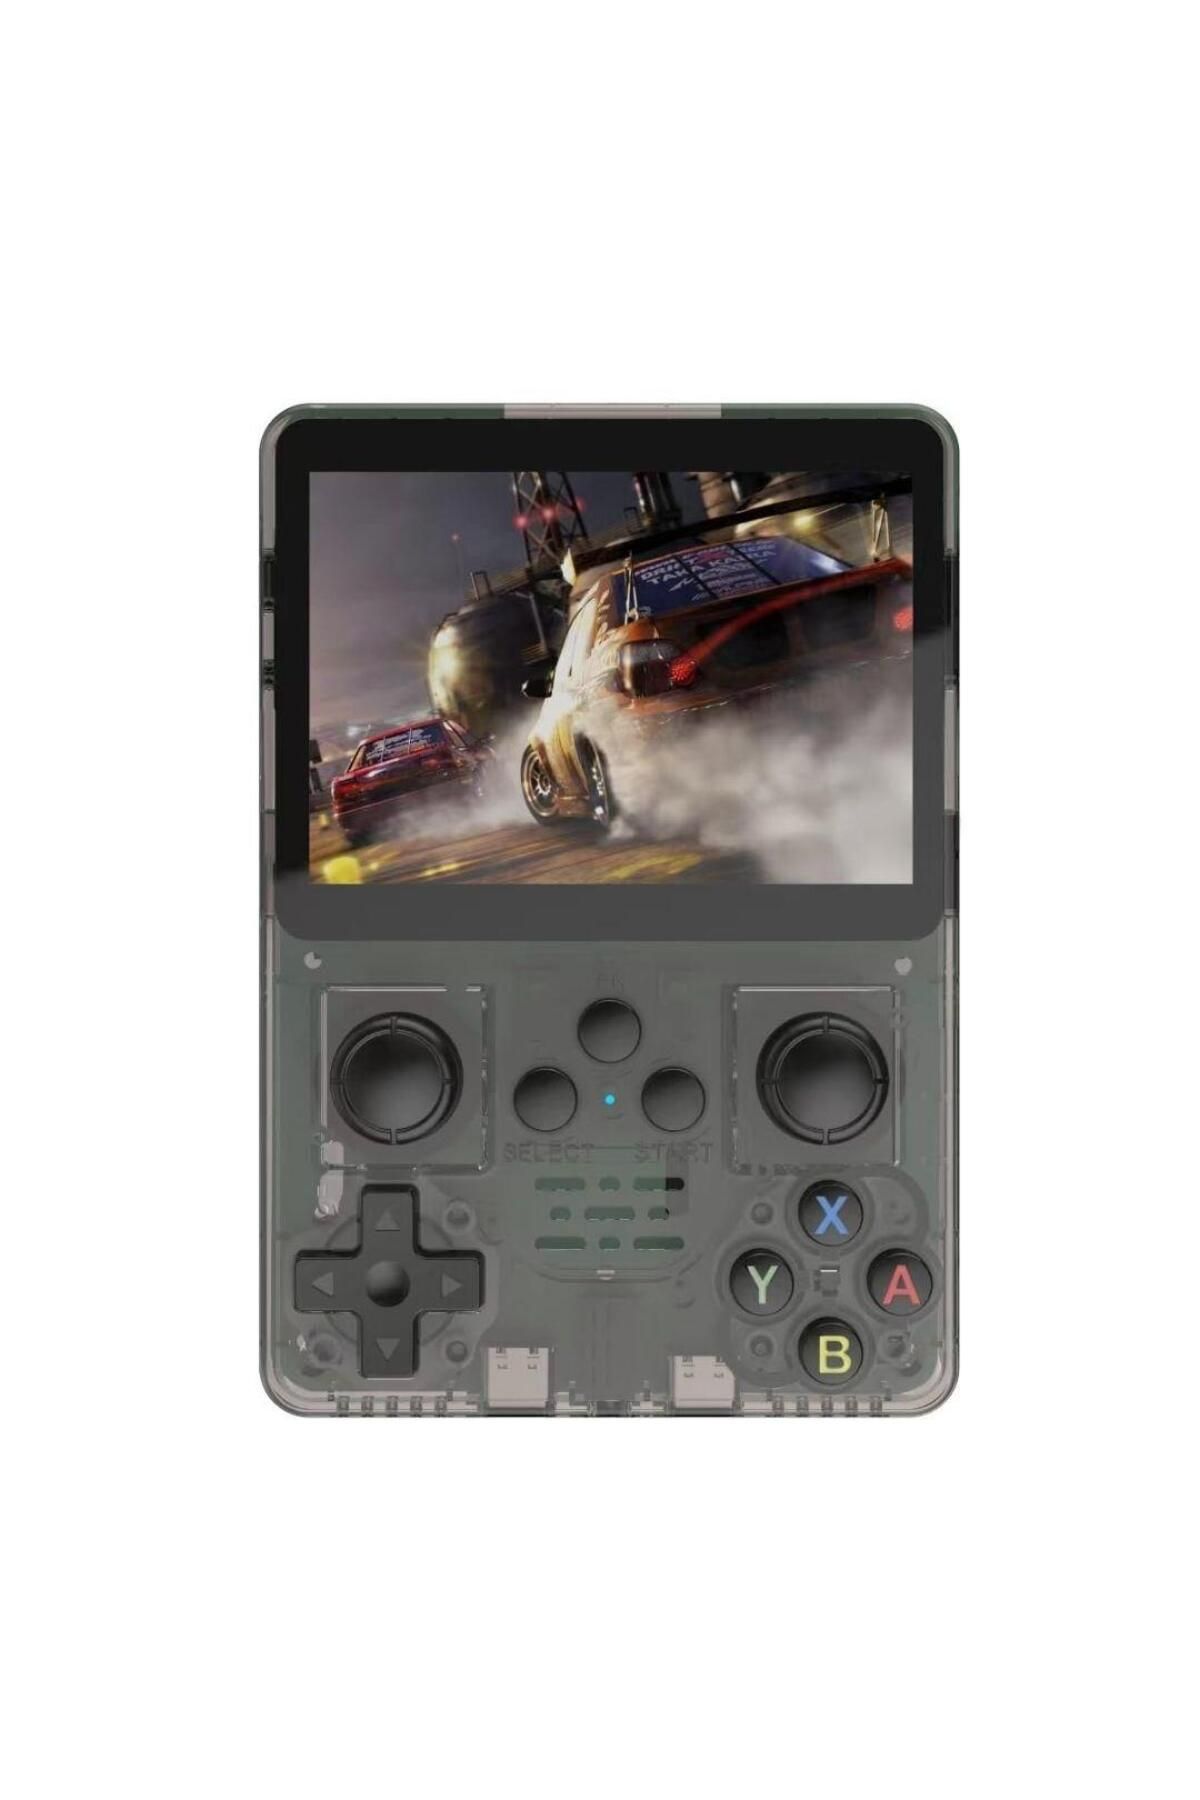 cosmostech Plus Taşınabilir Mini Klasik Retro El Video Atarisi Game Oyun Konsolu Hd Ips 3.5 renkli e